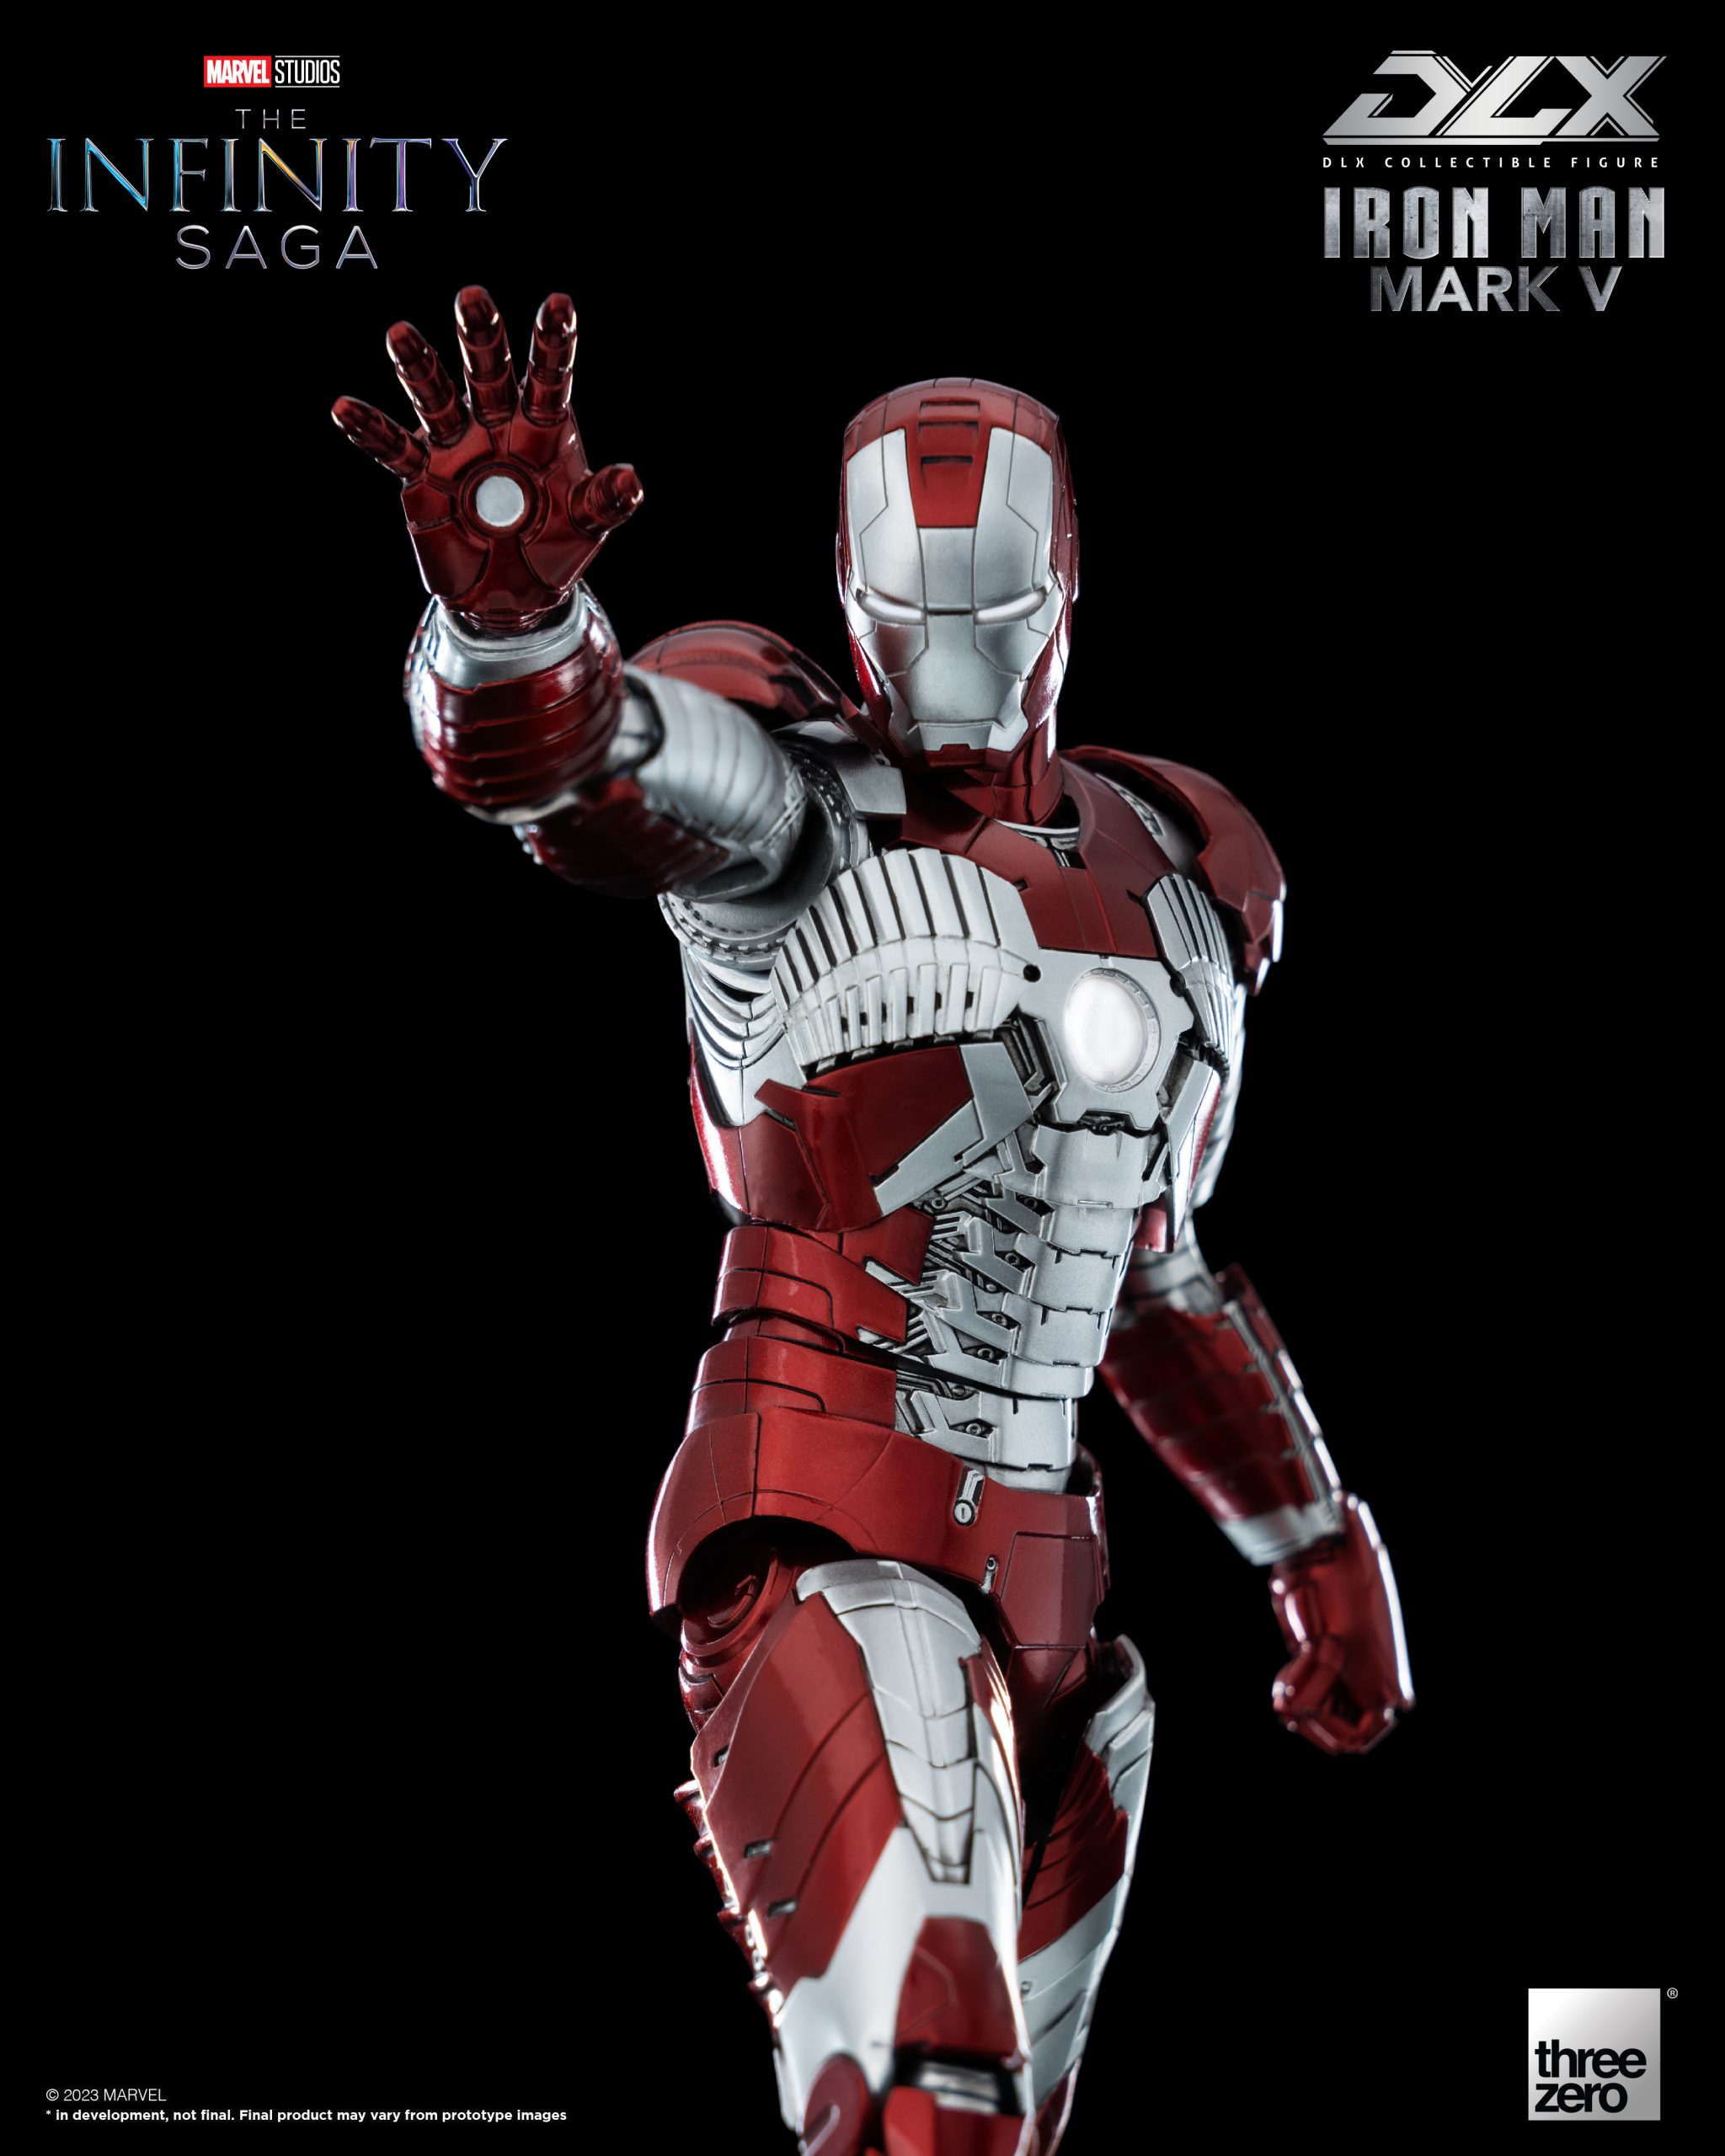 Marvel Studios: The Infinity Saga, DLX Iron Man Mark 5